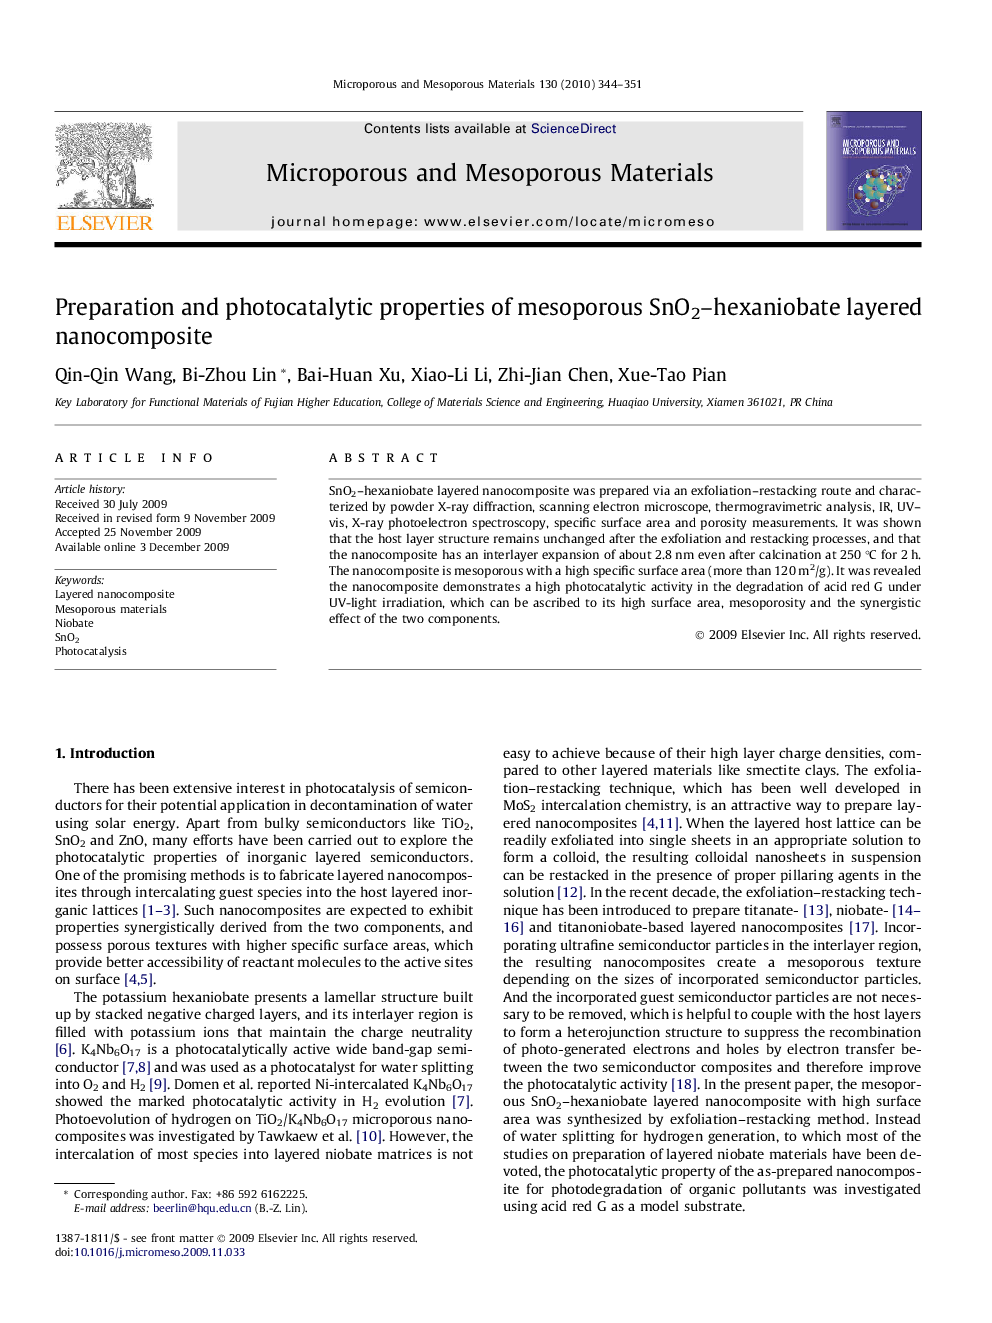 Preparation and photocatalytic properties of mesoporous SnO2–hexaniobate layered nanocomposite